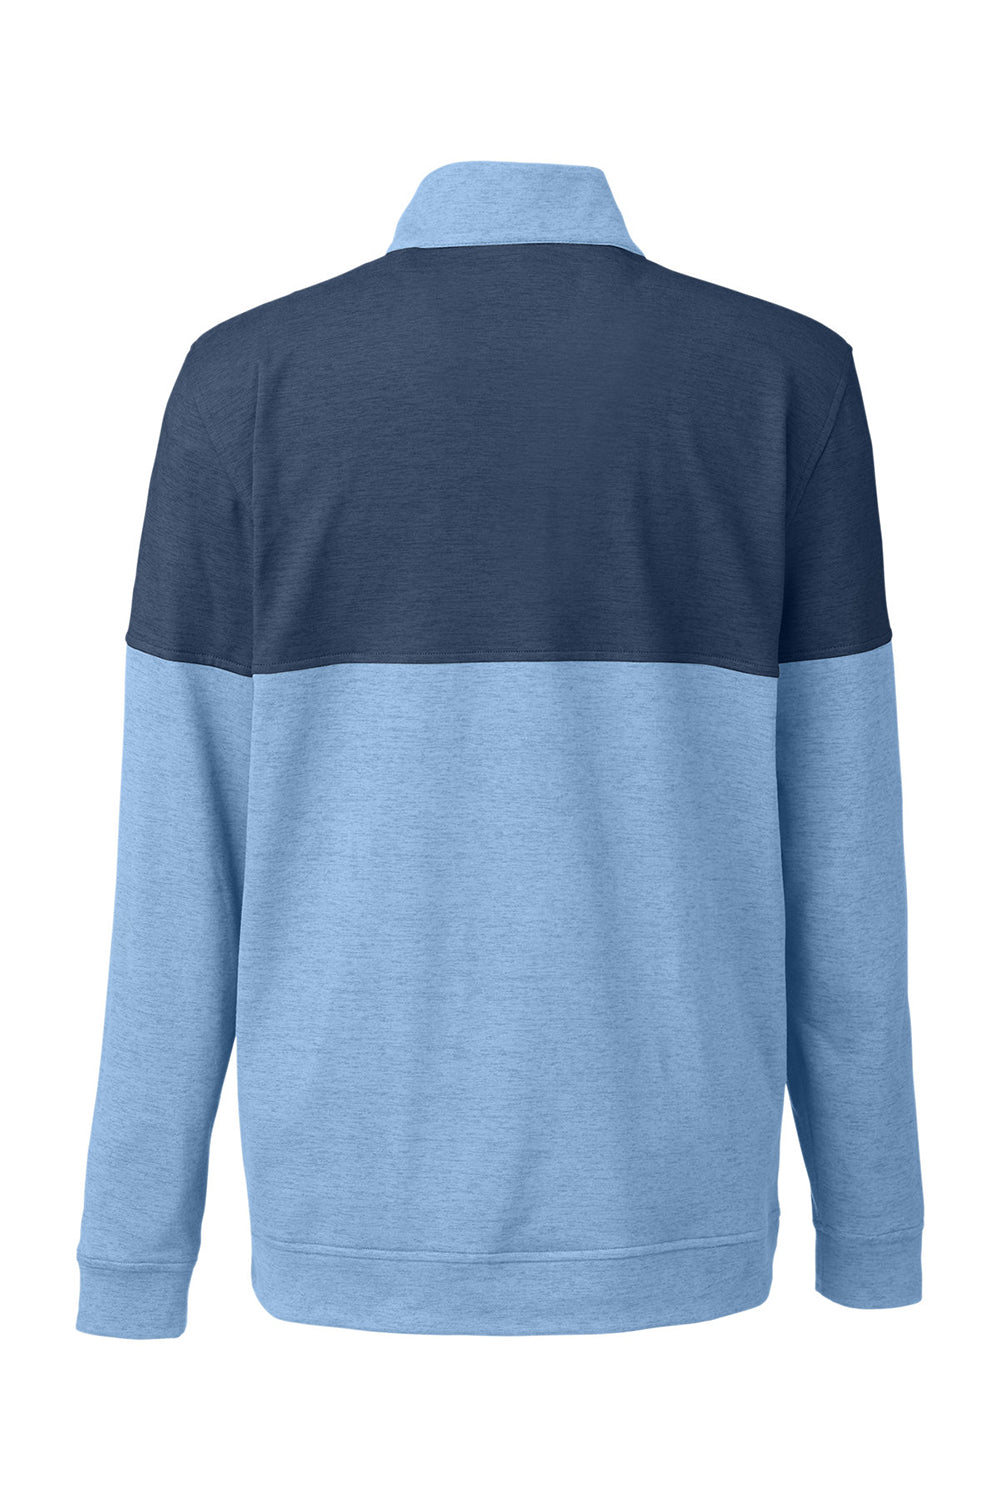 Puma 595803 Mens Cloudspun Warm Up 1/4 Zip Sweatshirt Bell Blue/Dark Denim Blue Flat Back